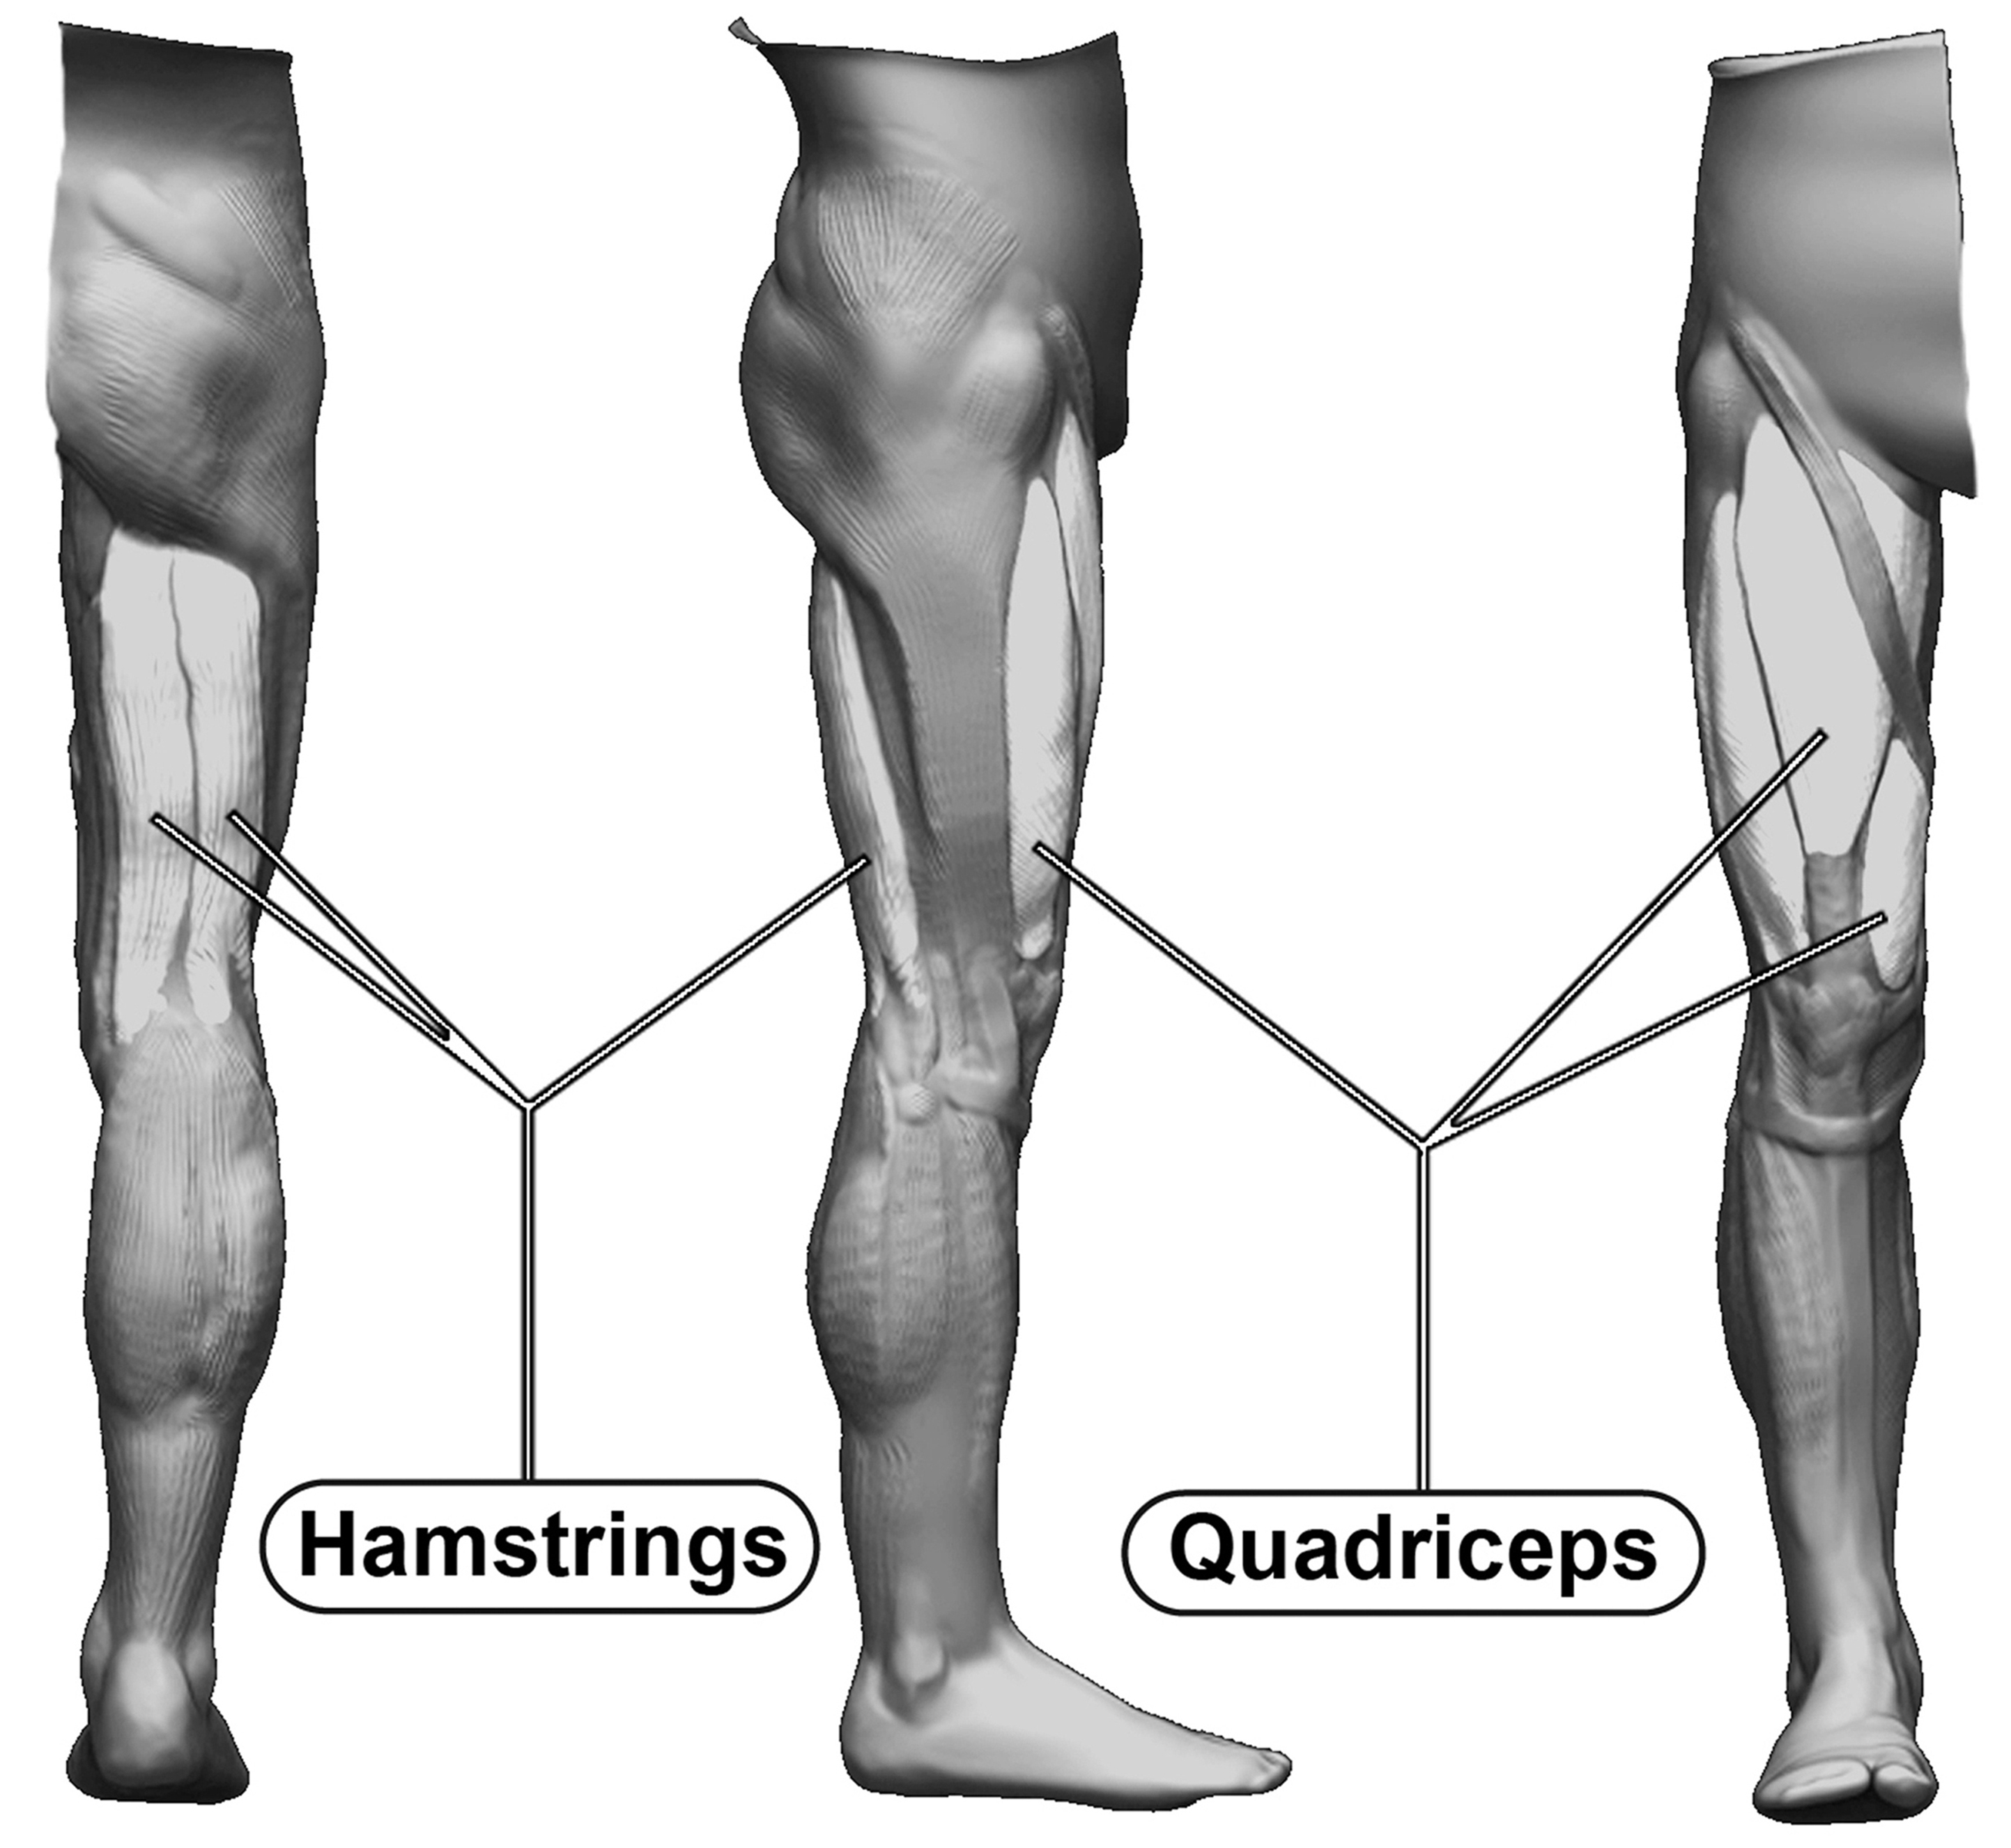 The Human Leg's Muscle Anatomy